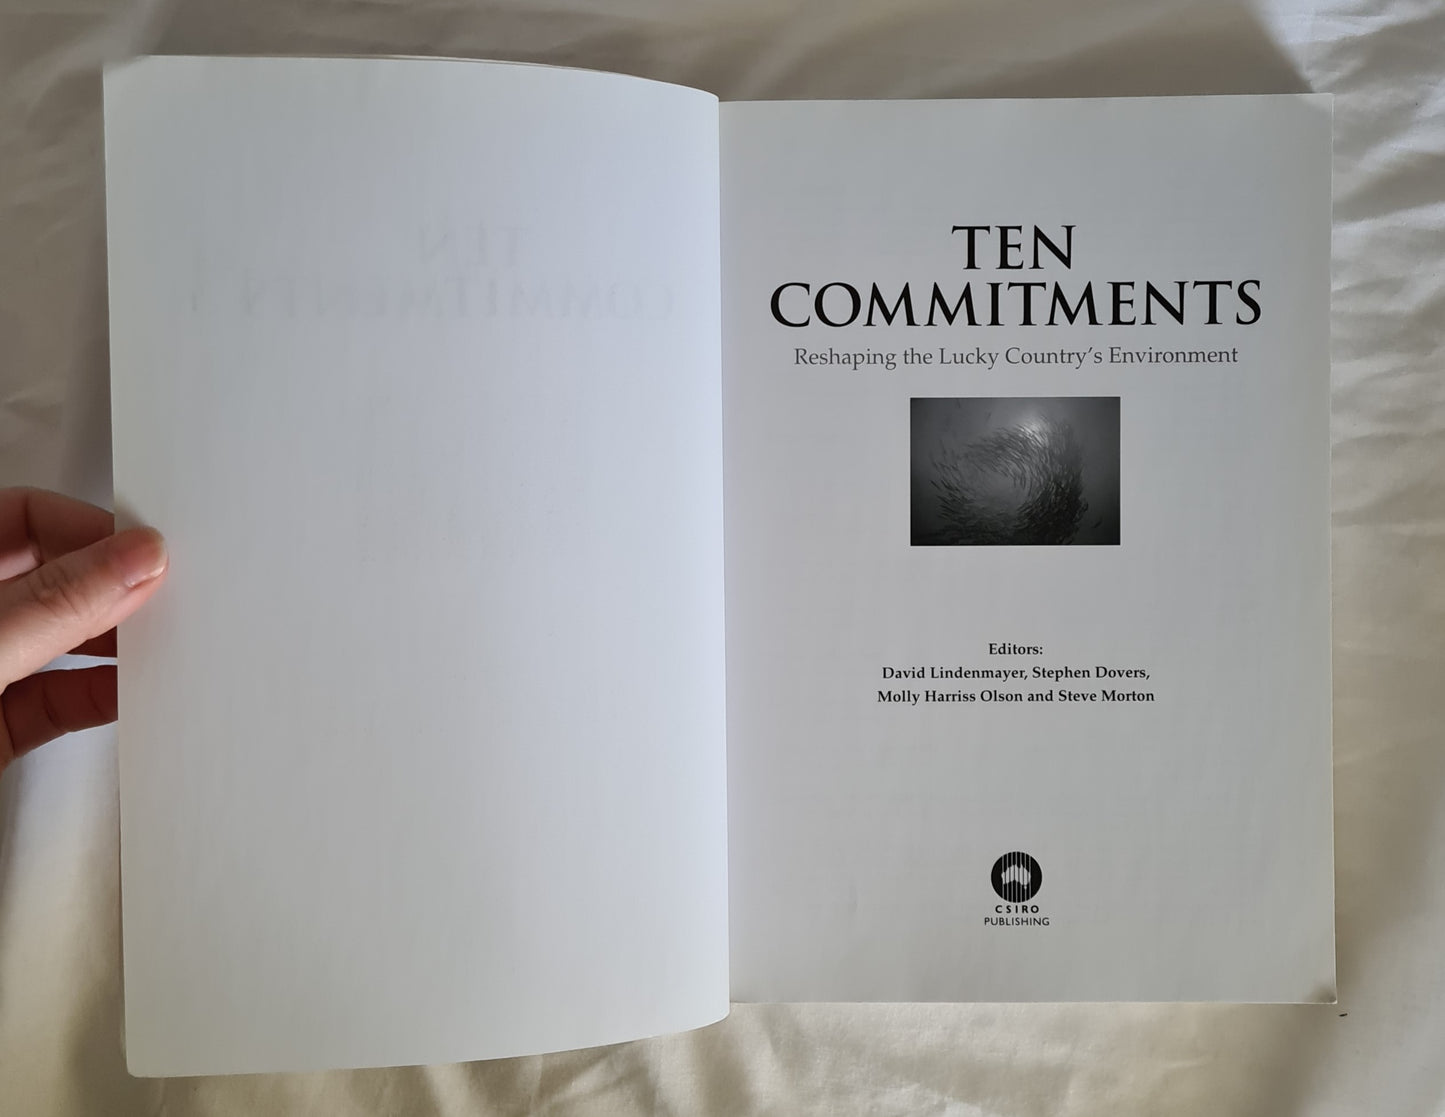 Ten Commitments by David Lindenmayer, et al.